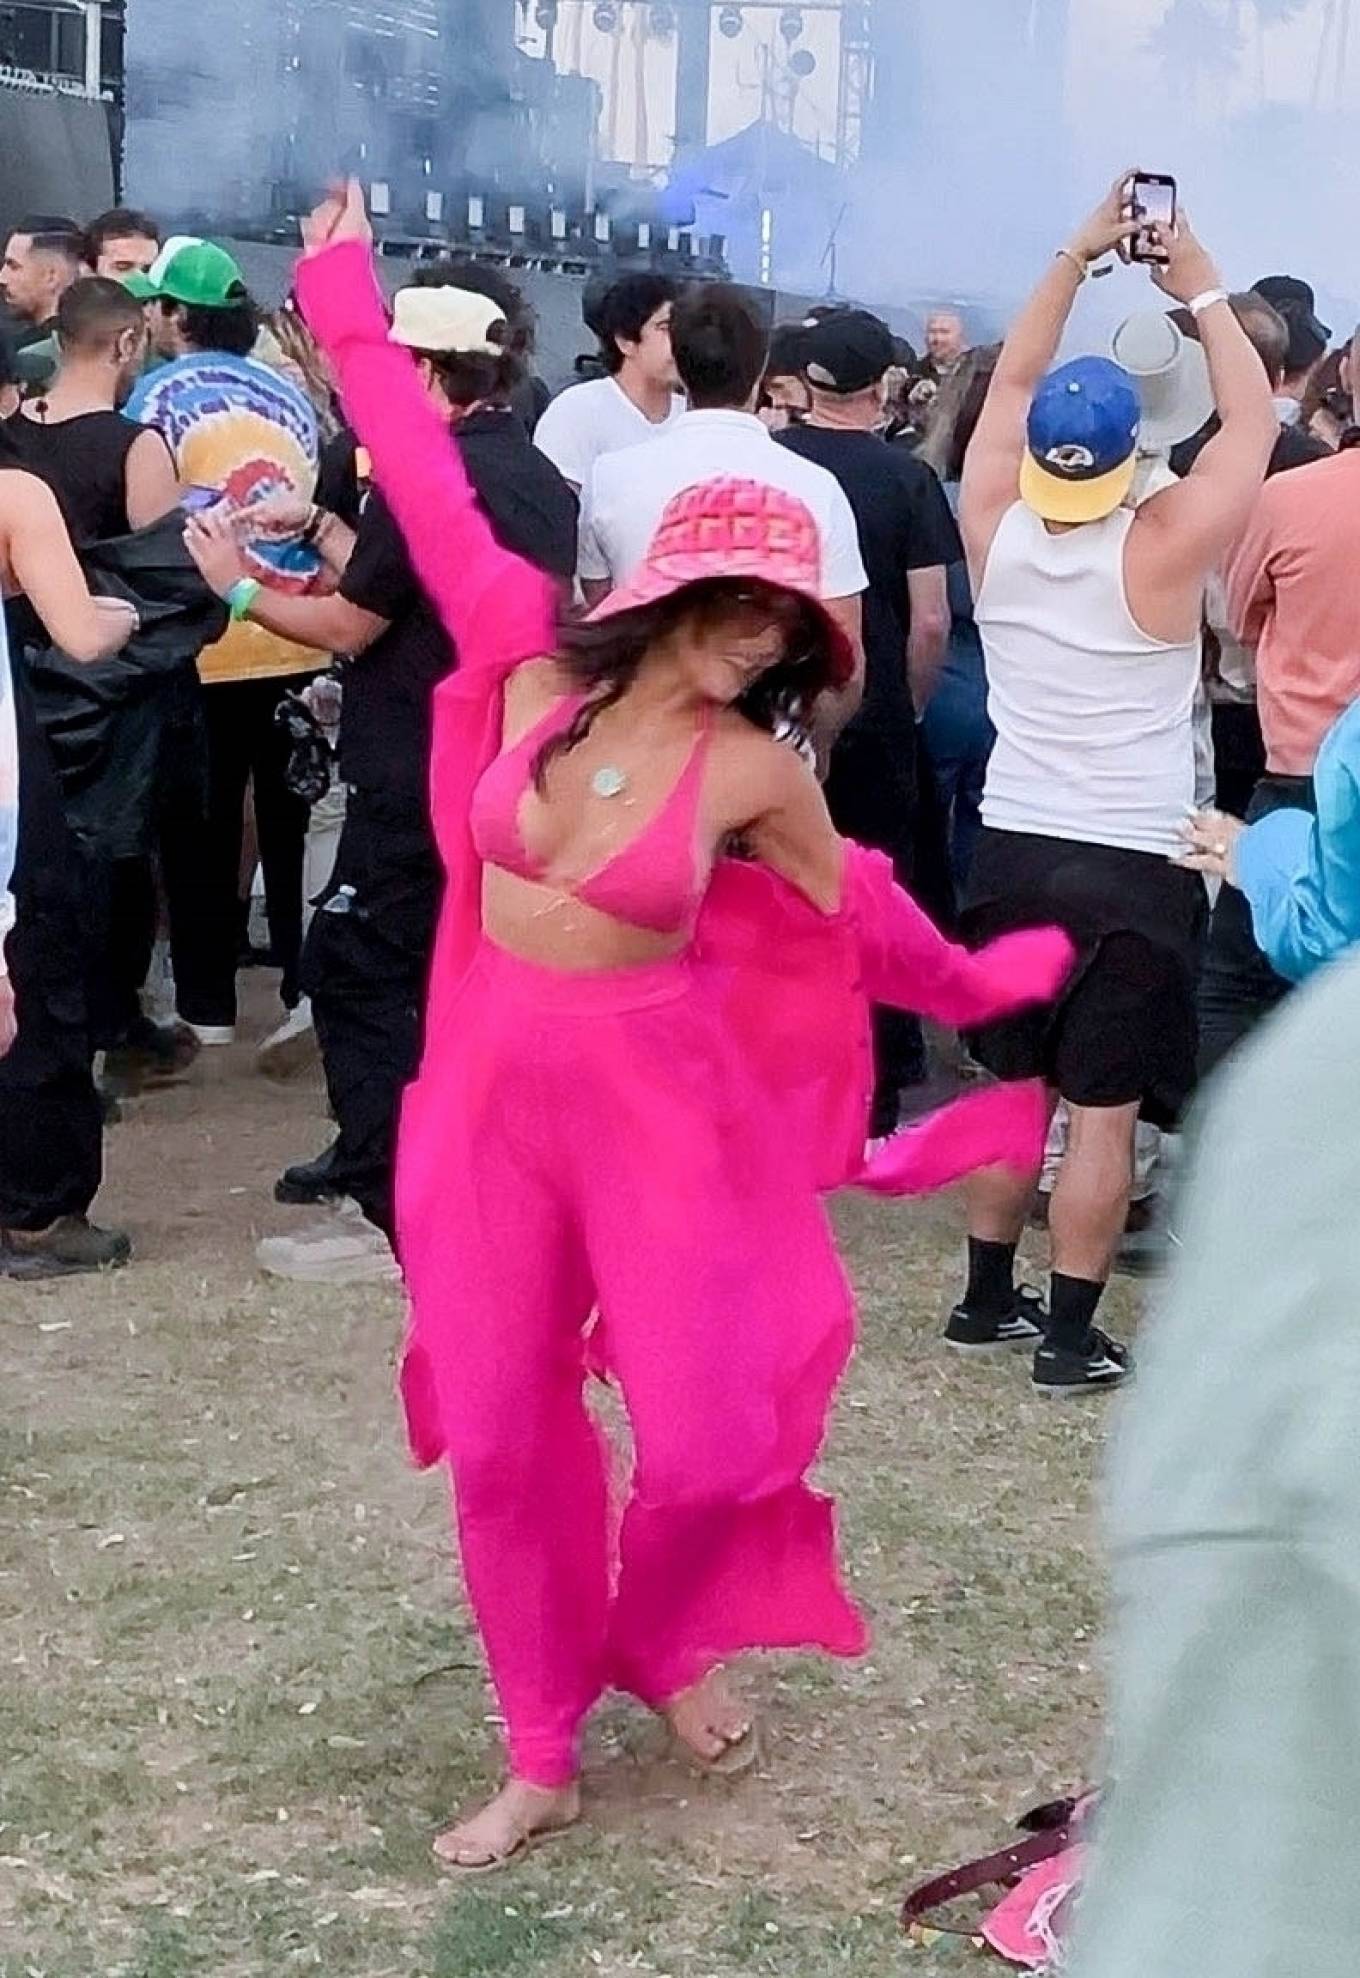 Vanessa Hudgens - Dancing at the Coachella 2022 Music Festival in Indio